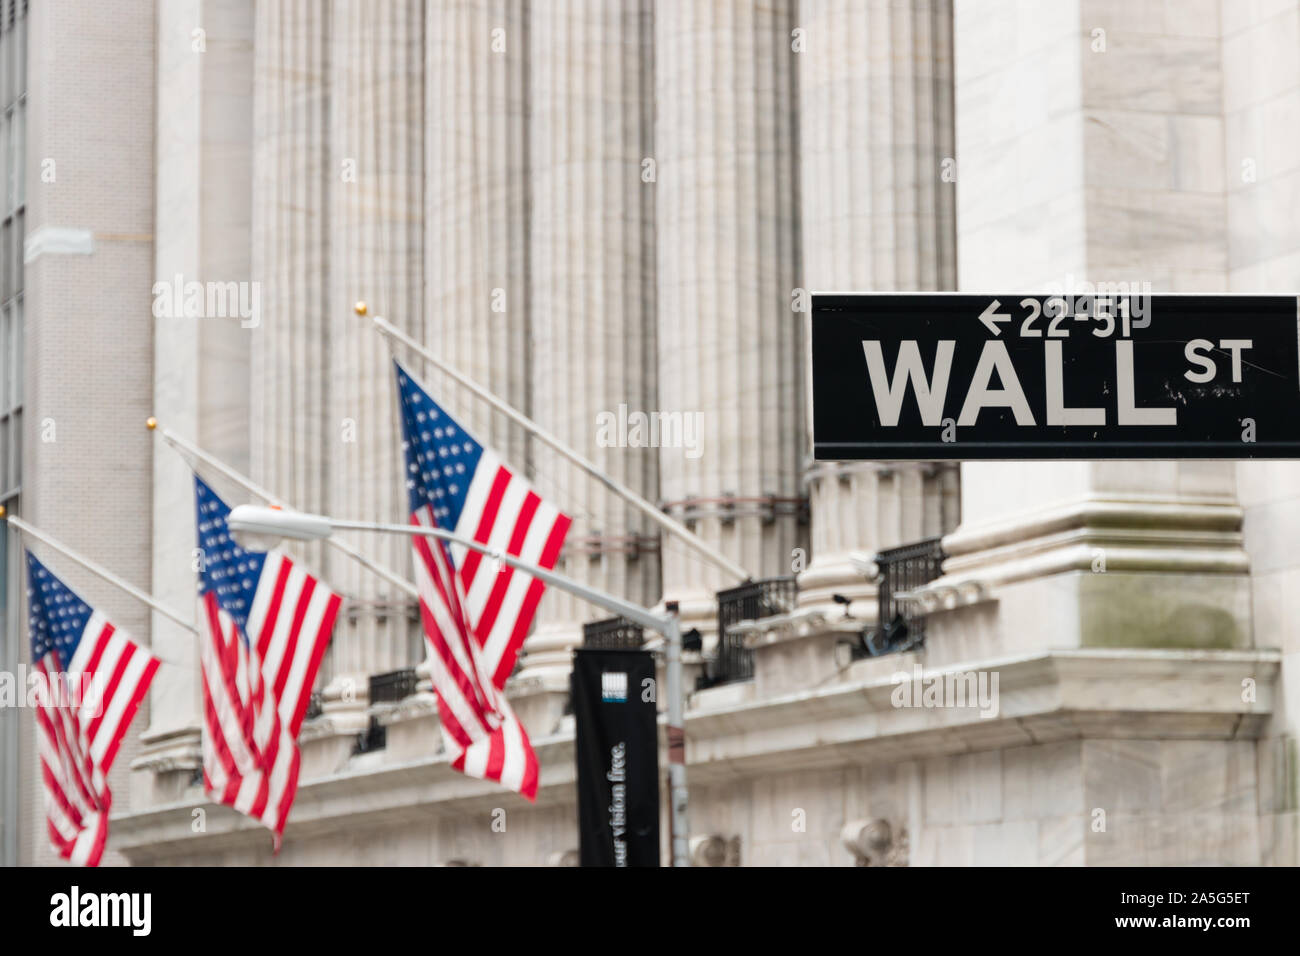 Wall Street Stock Photo